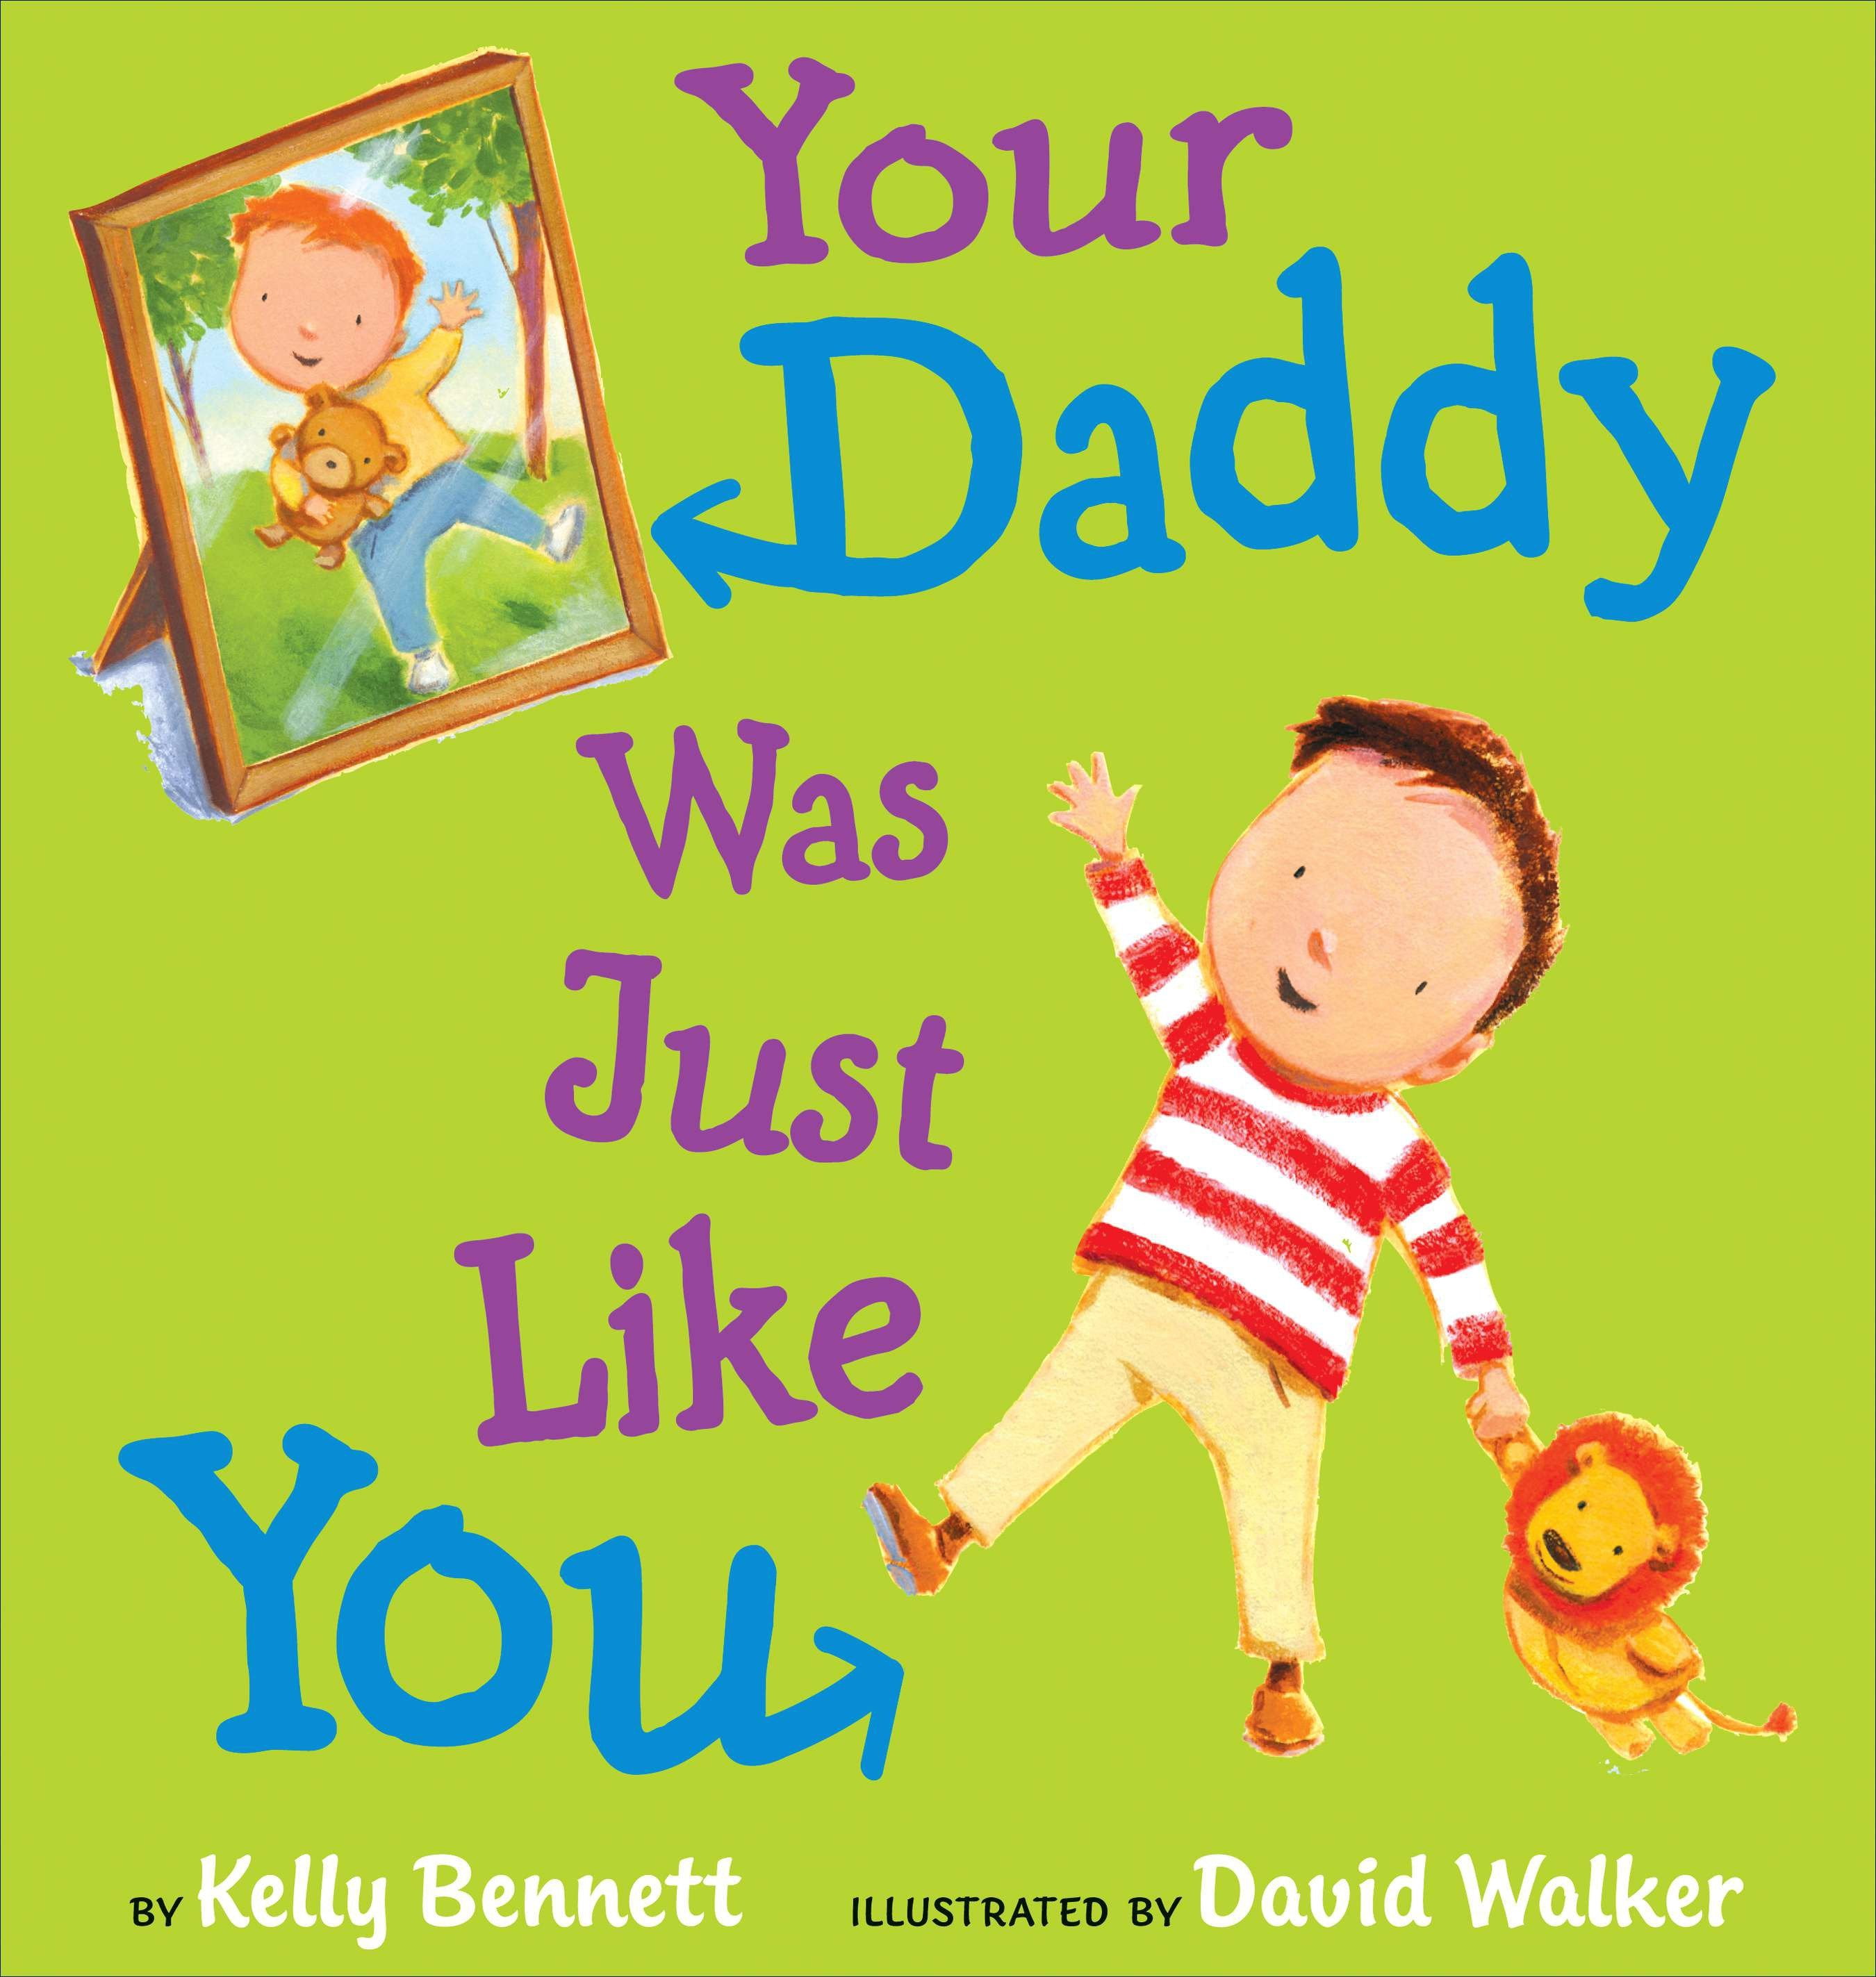 Дэдди перевод. Your Daddy. Келли Уолкер. Was your Daddy. Your dad.